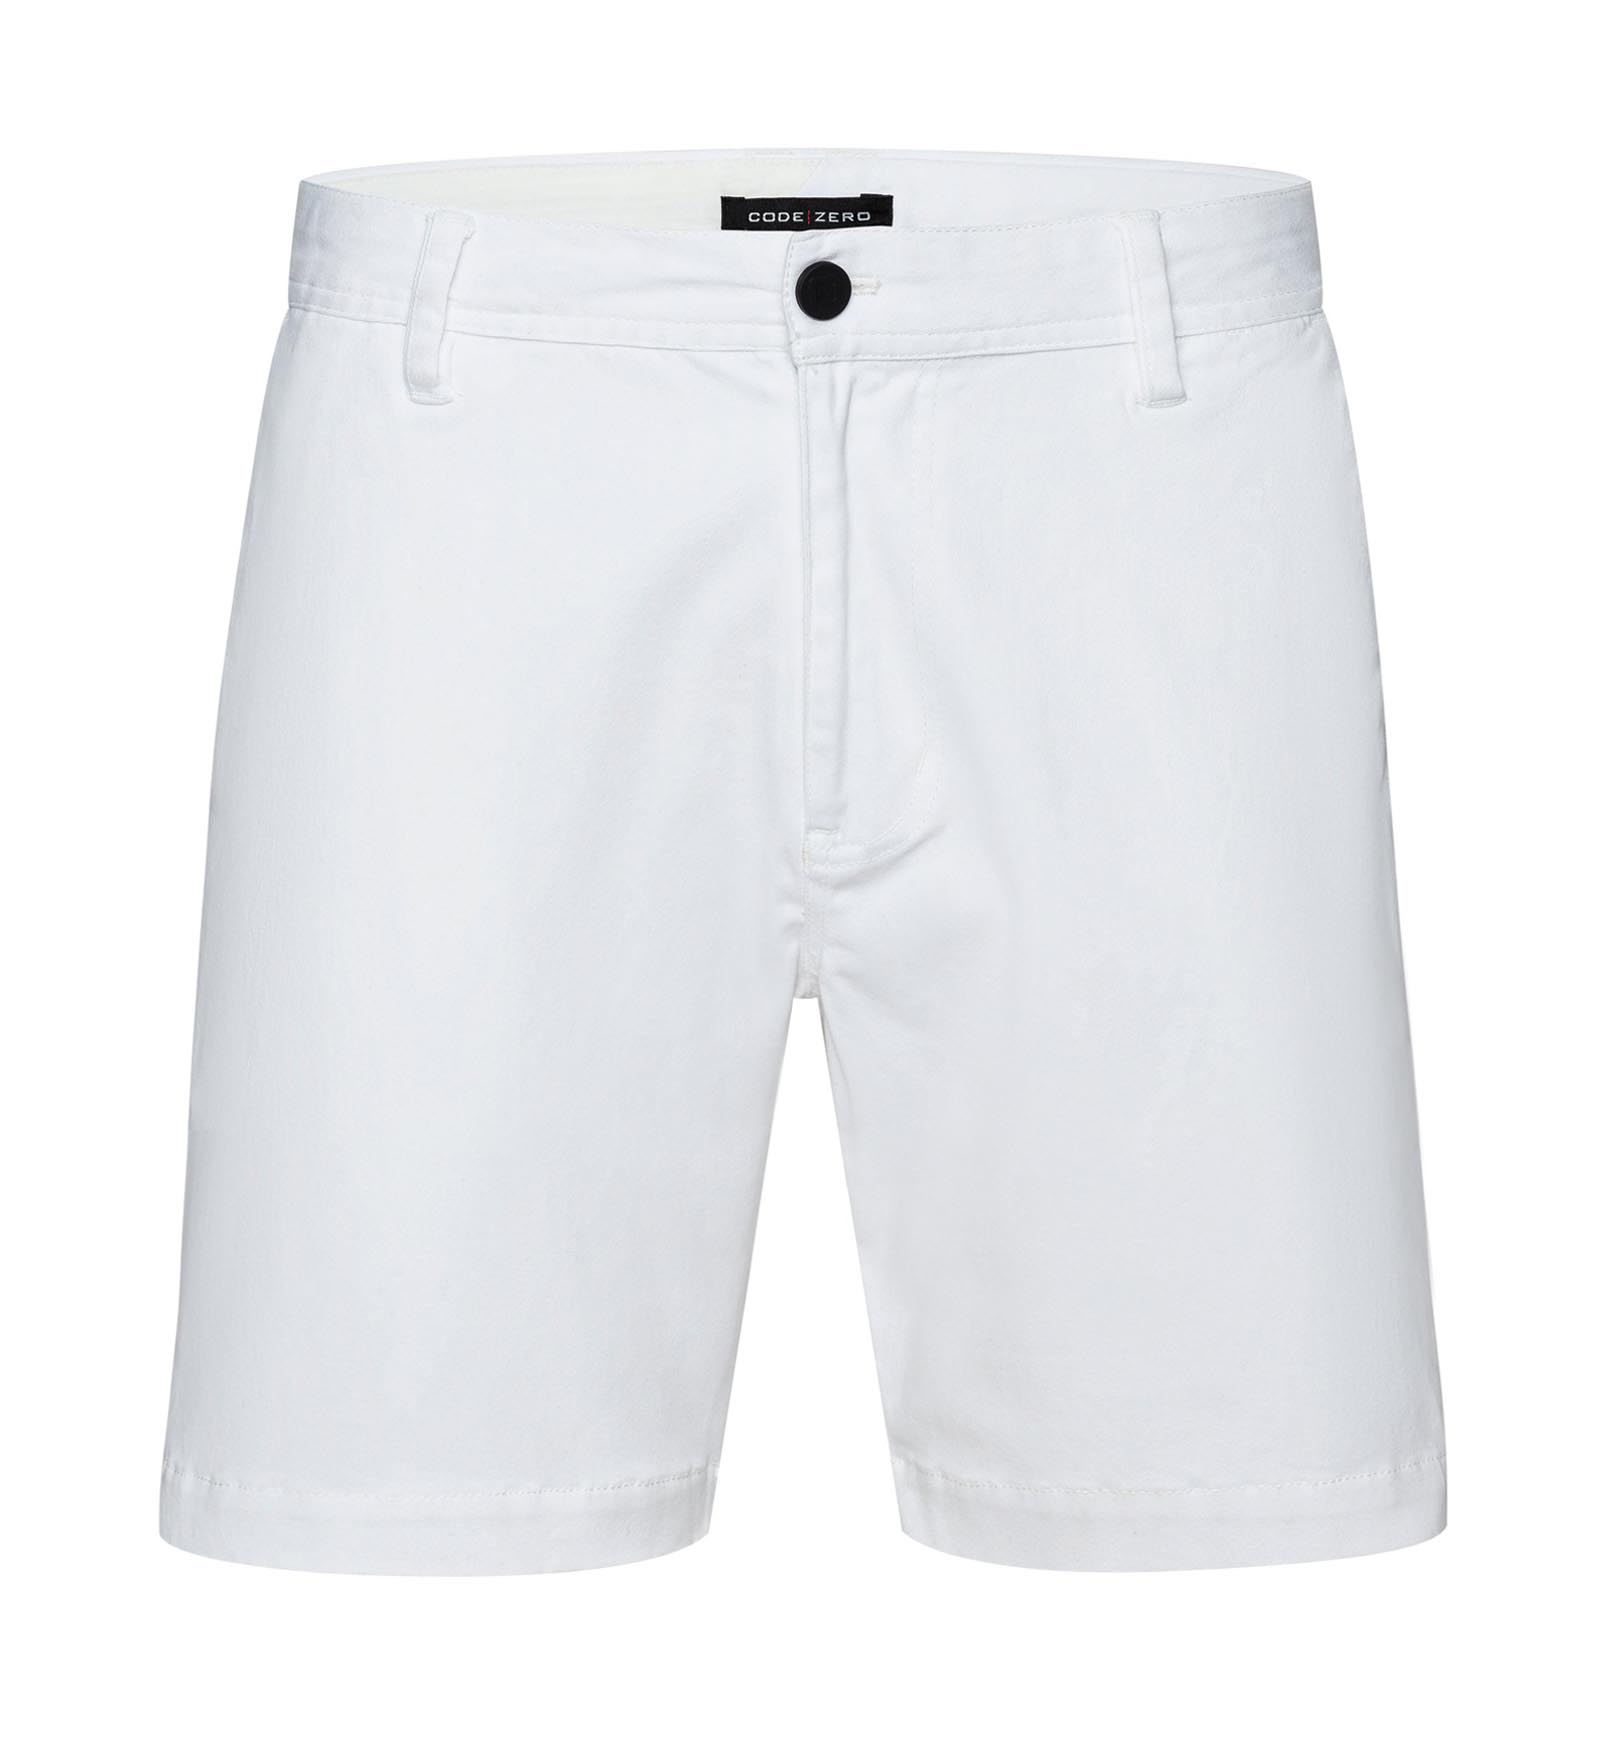 Mens Clothing Shorts Bermuda shorts White for Men Roy Rogers Leather Shorts & Bermuda Shorts in Ivory 